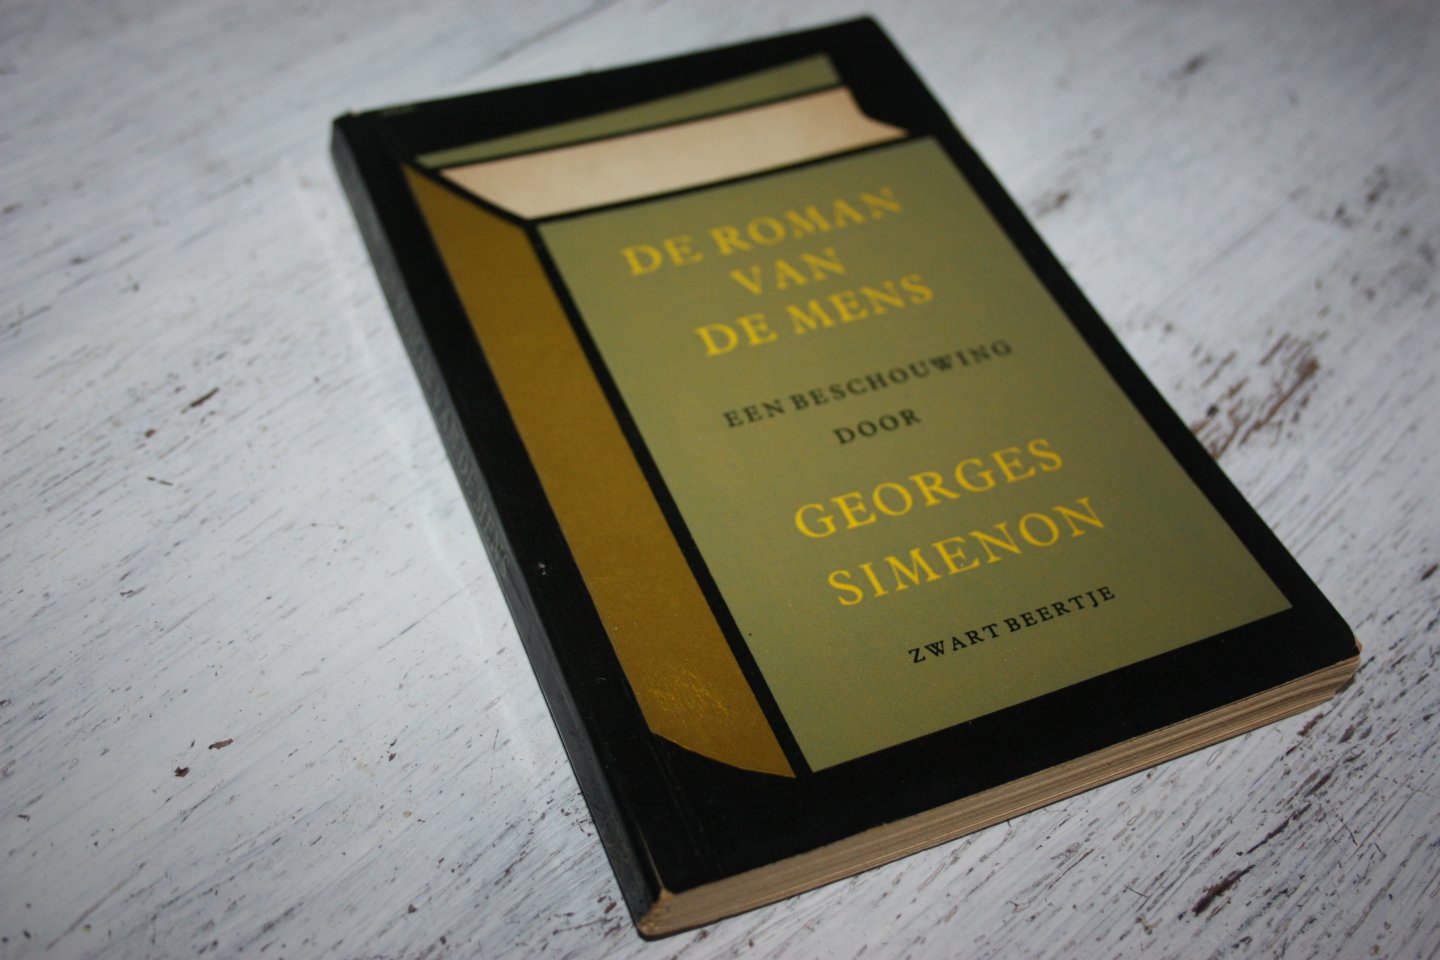 Simenon, Georges - DE ROMAN VAN DE MENS